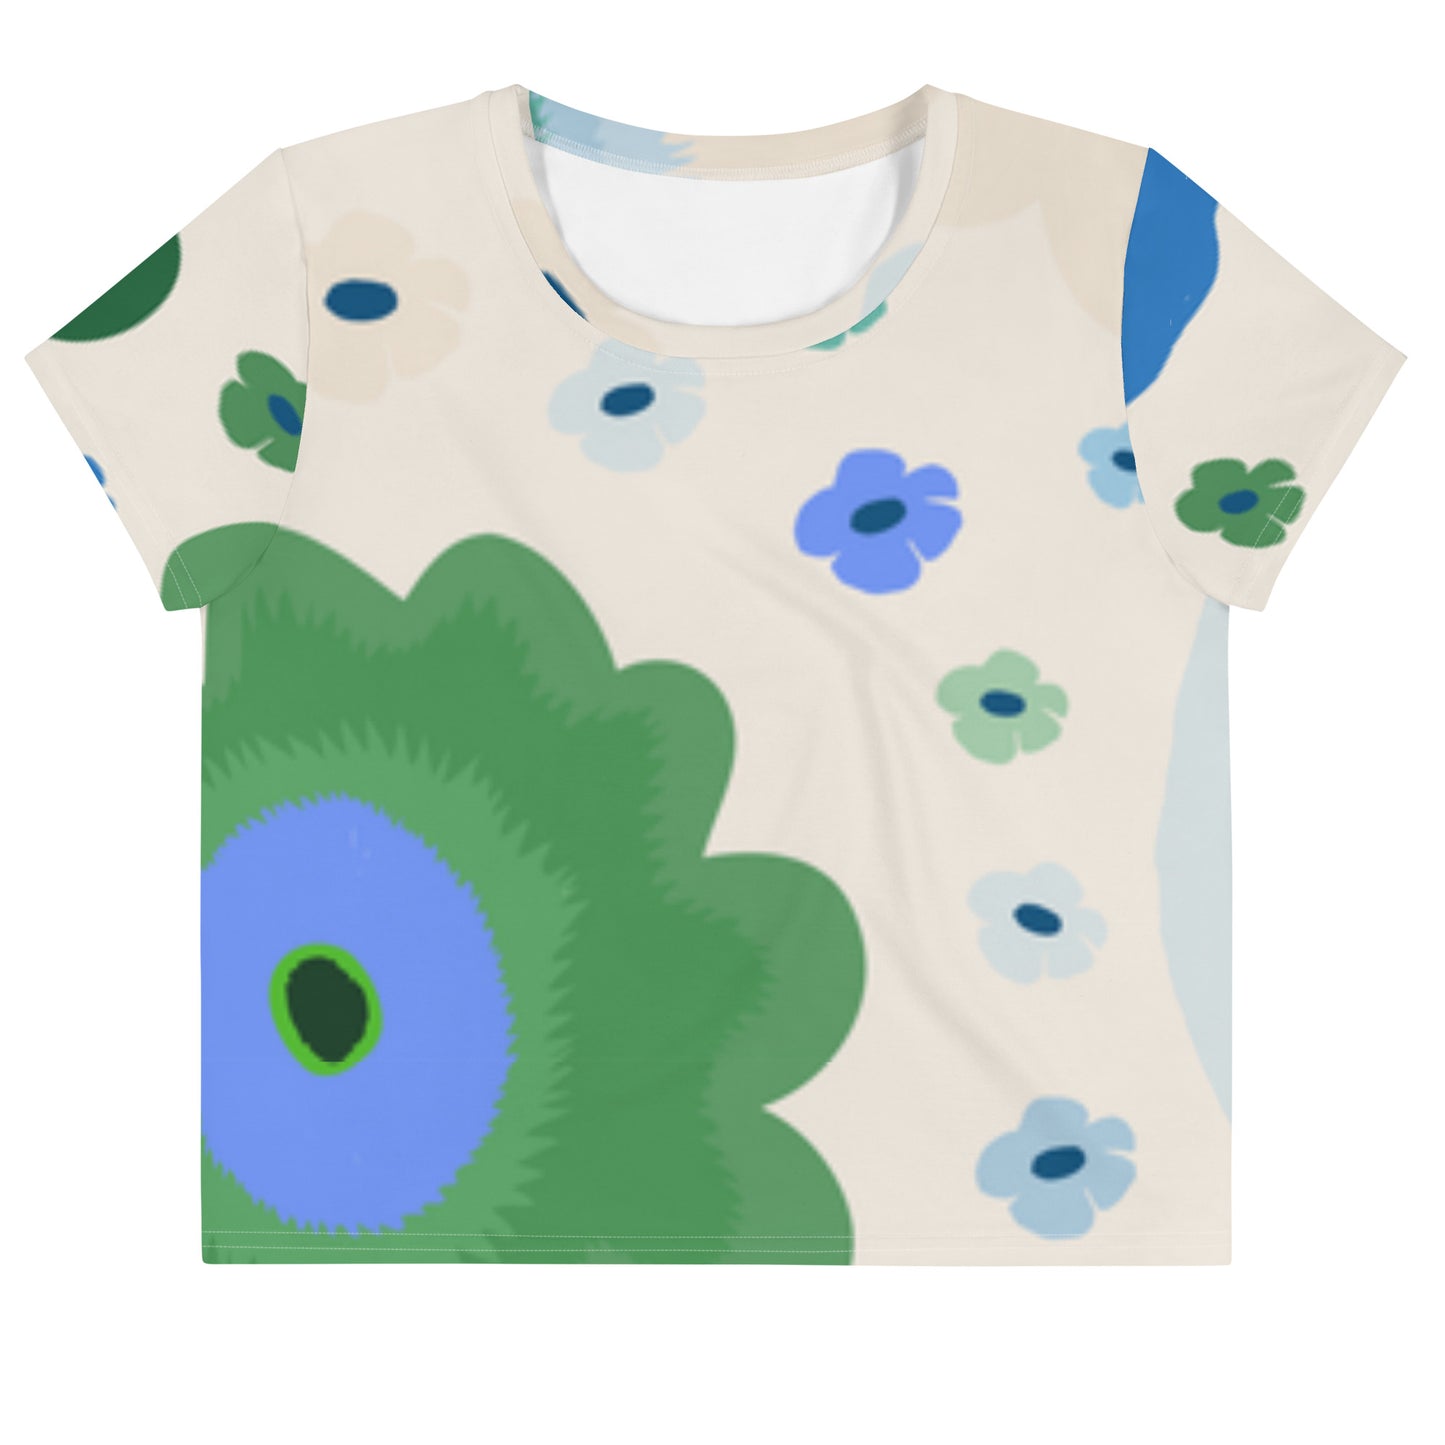 Kevät - Crop Tee - Shirts & Tops- Print N Stuff - [designed in Turku Finland]